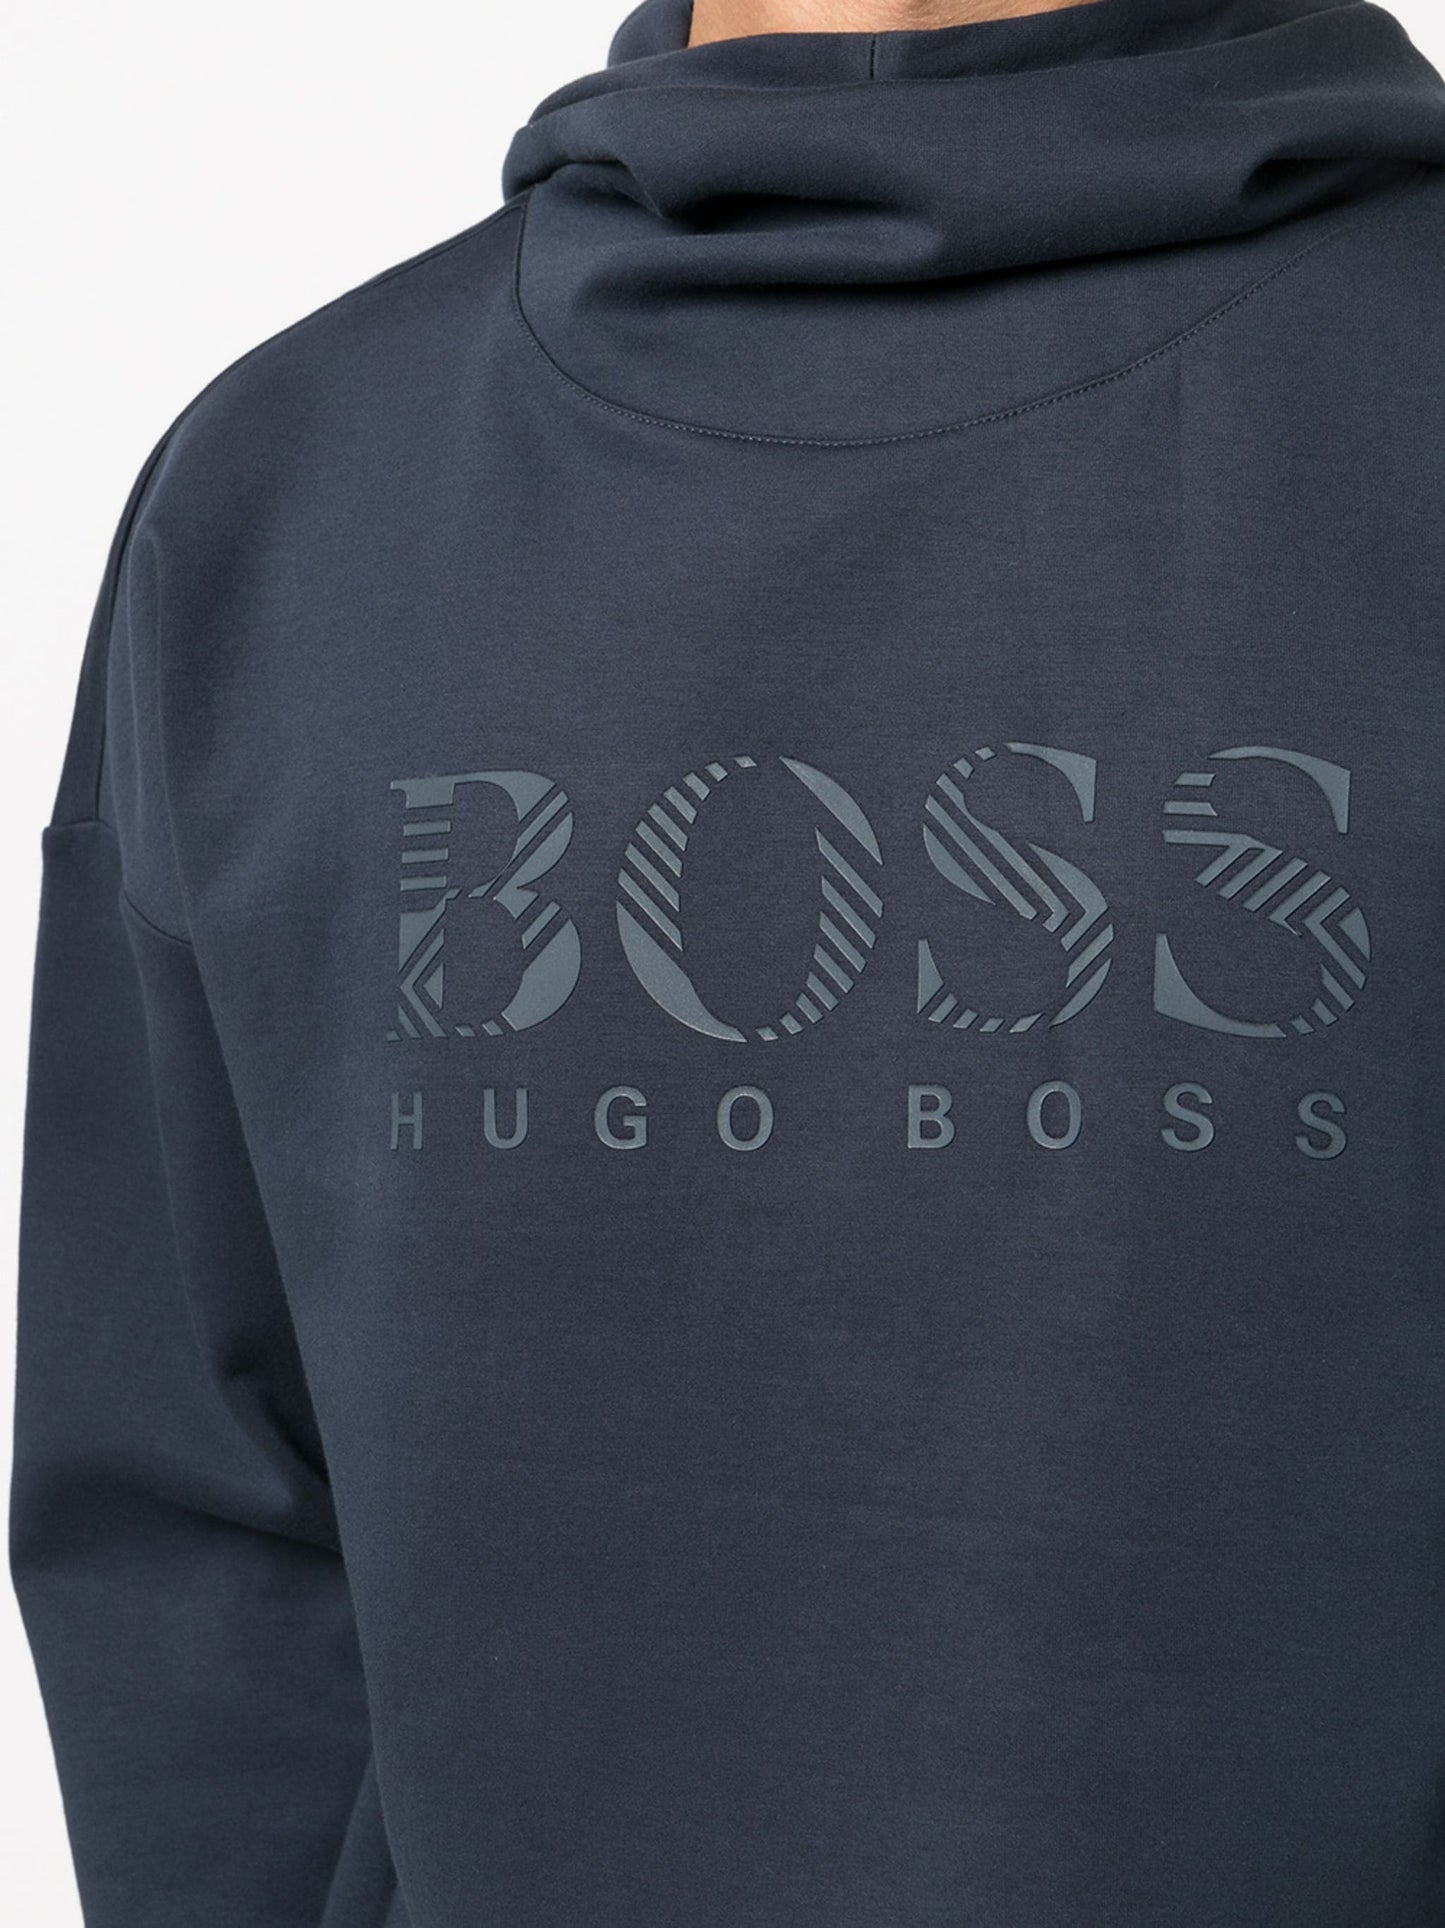 Hugo Boss Men's Soody Iconic Rubberized Tonal Logo Blue Hoody Sweatshirt